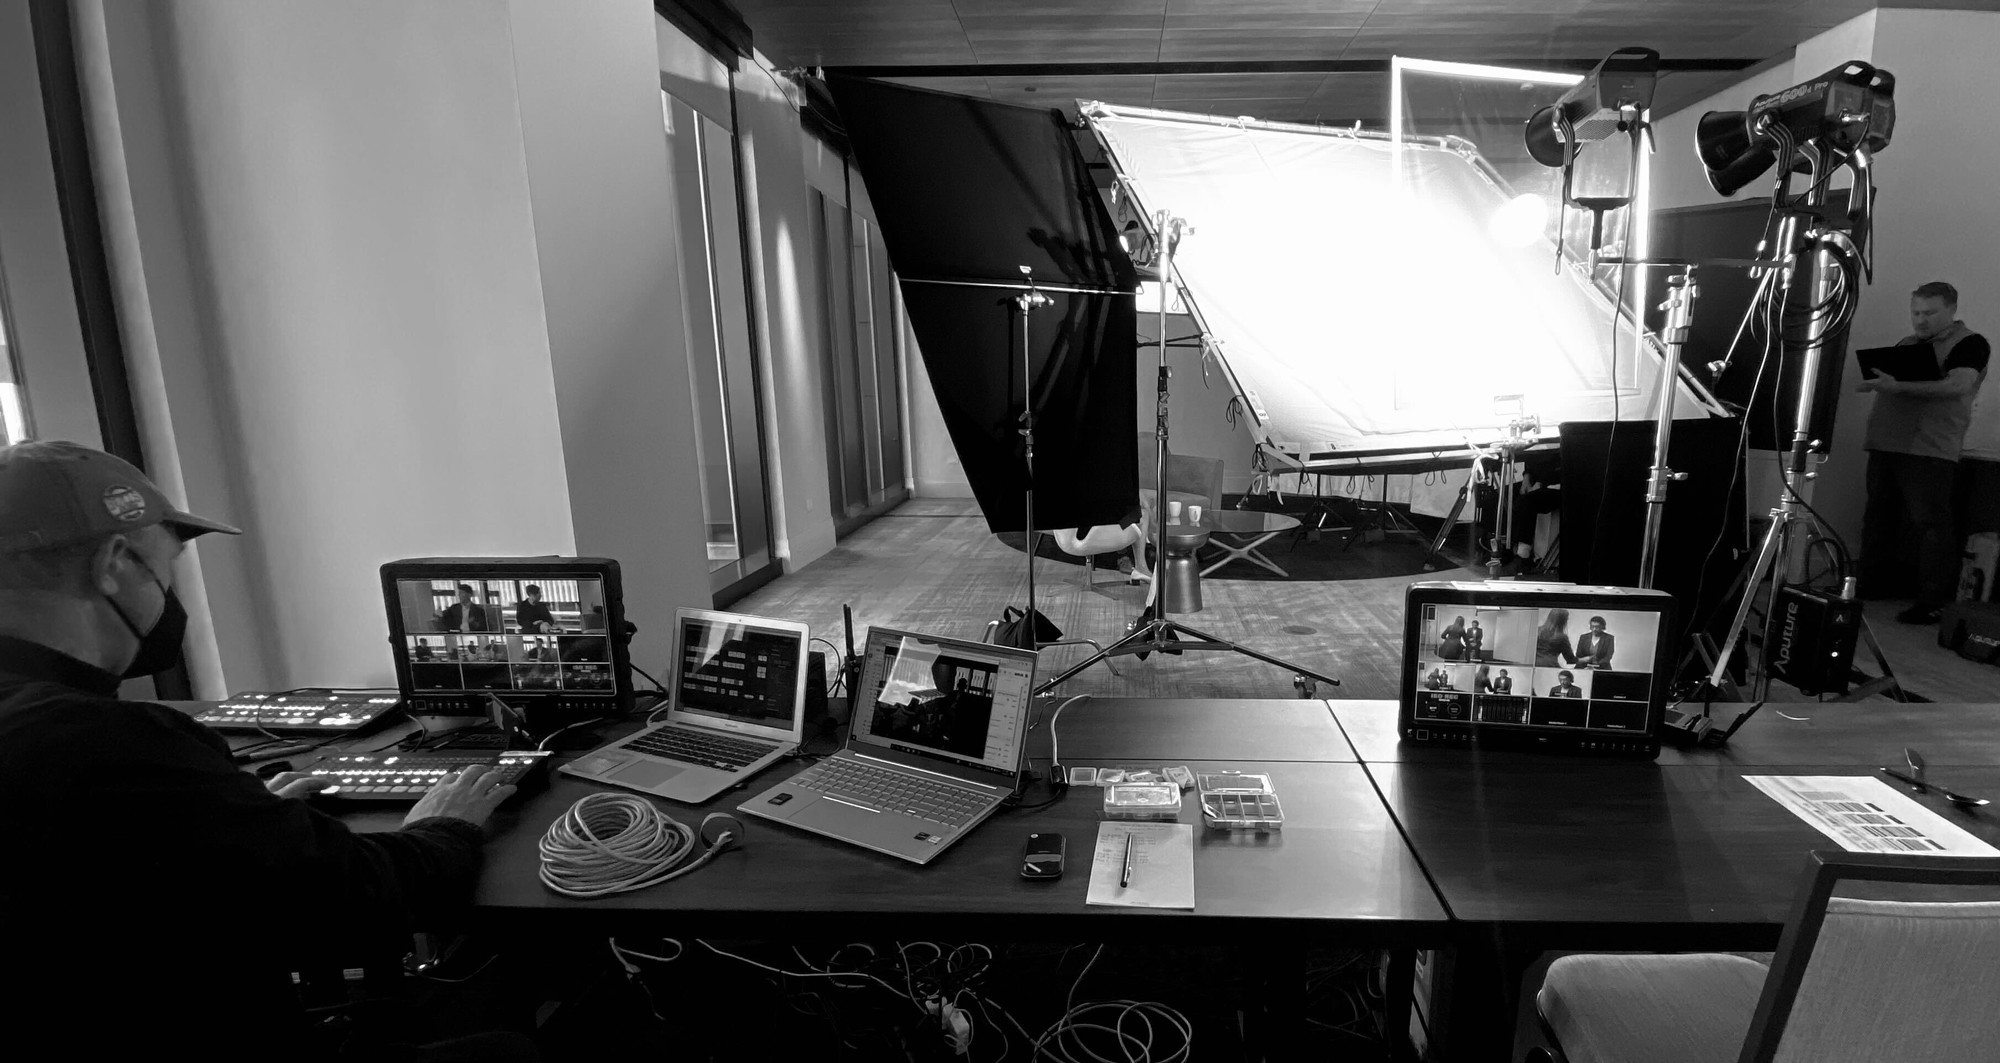 A Myriad team member editing a video in the IBM creators’ studio